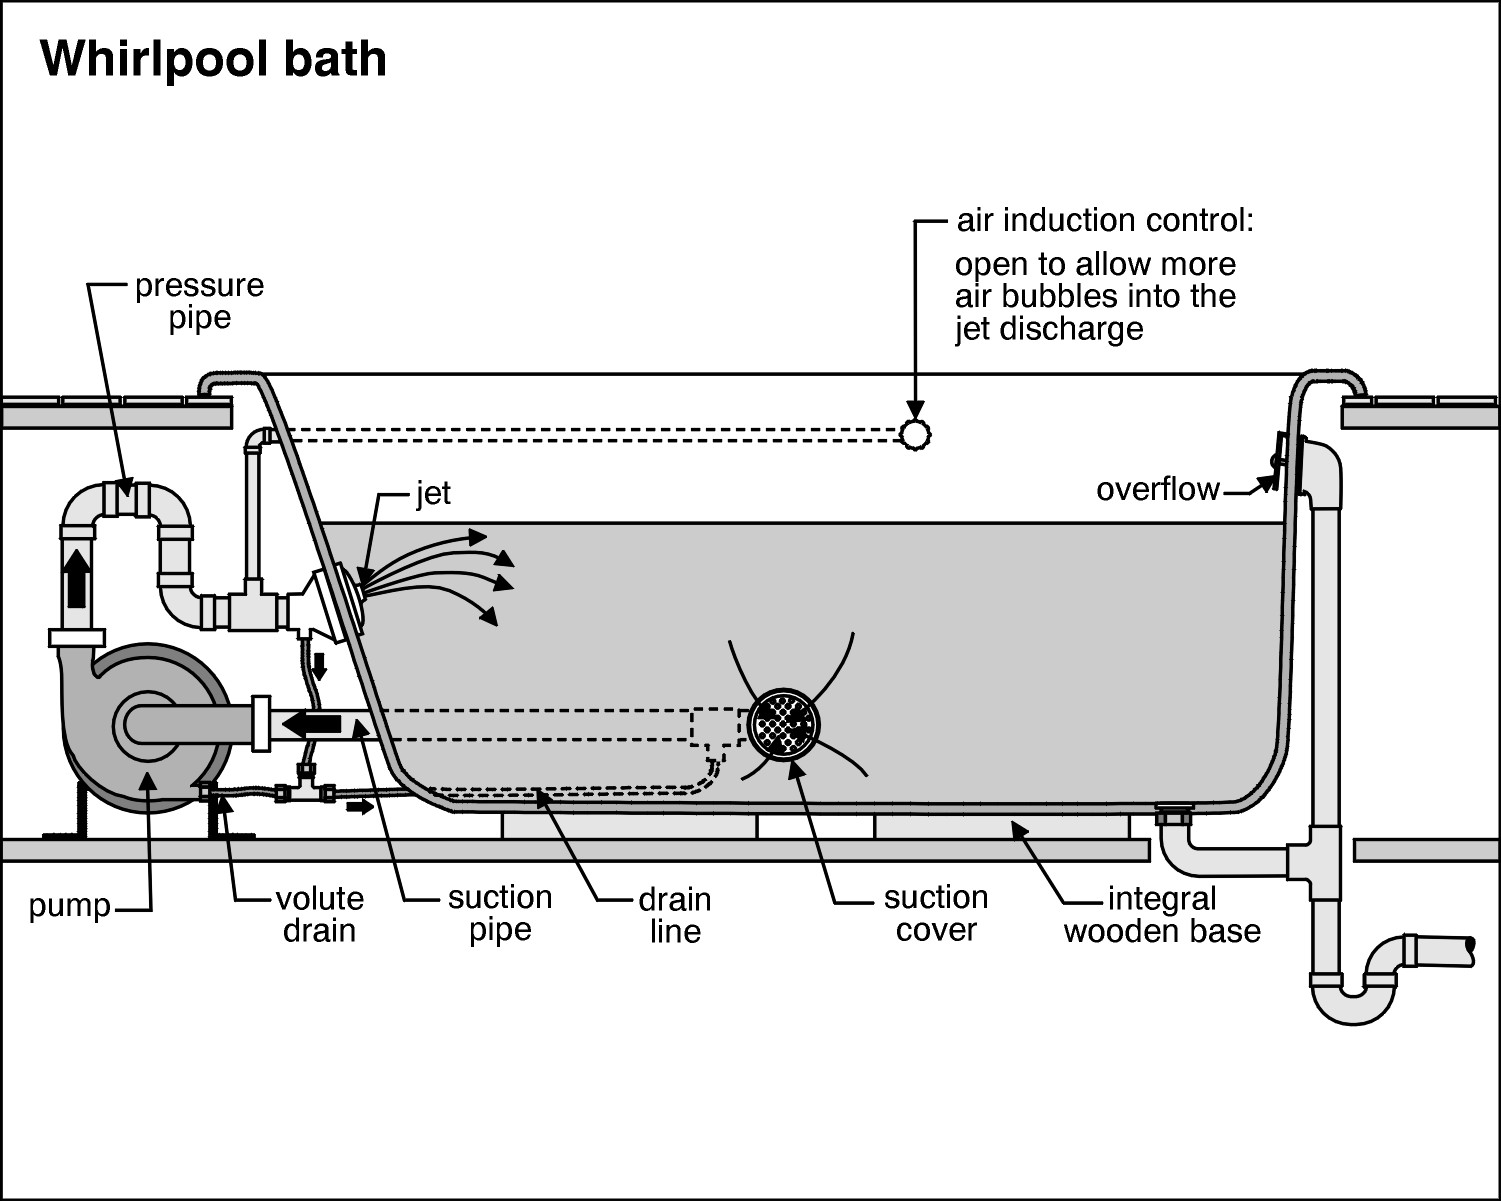 Home Repairs and Maintenance: Bathroom Whirlpool Bath